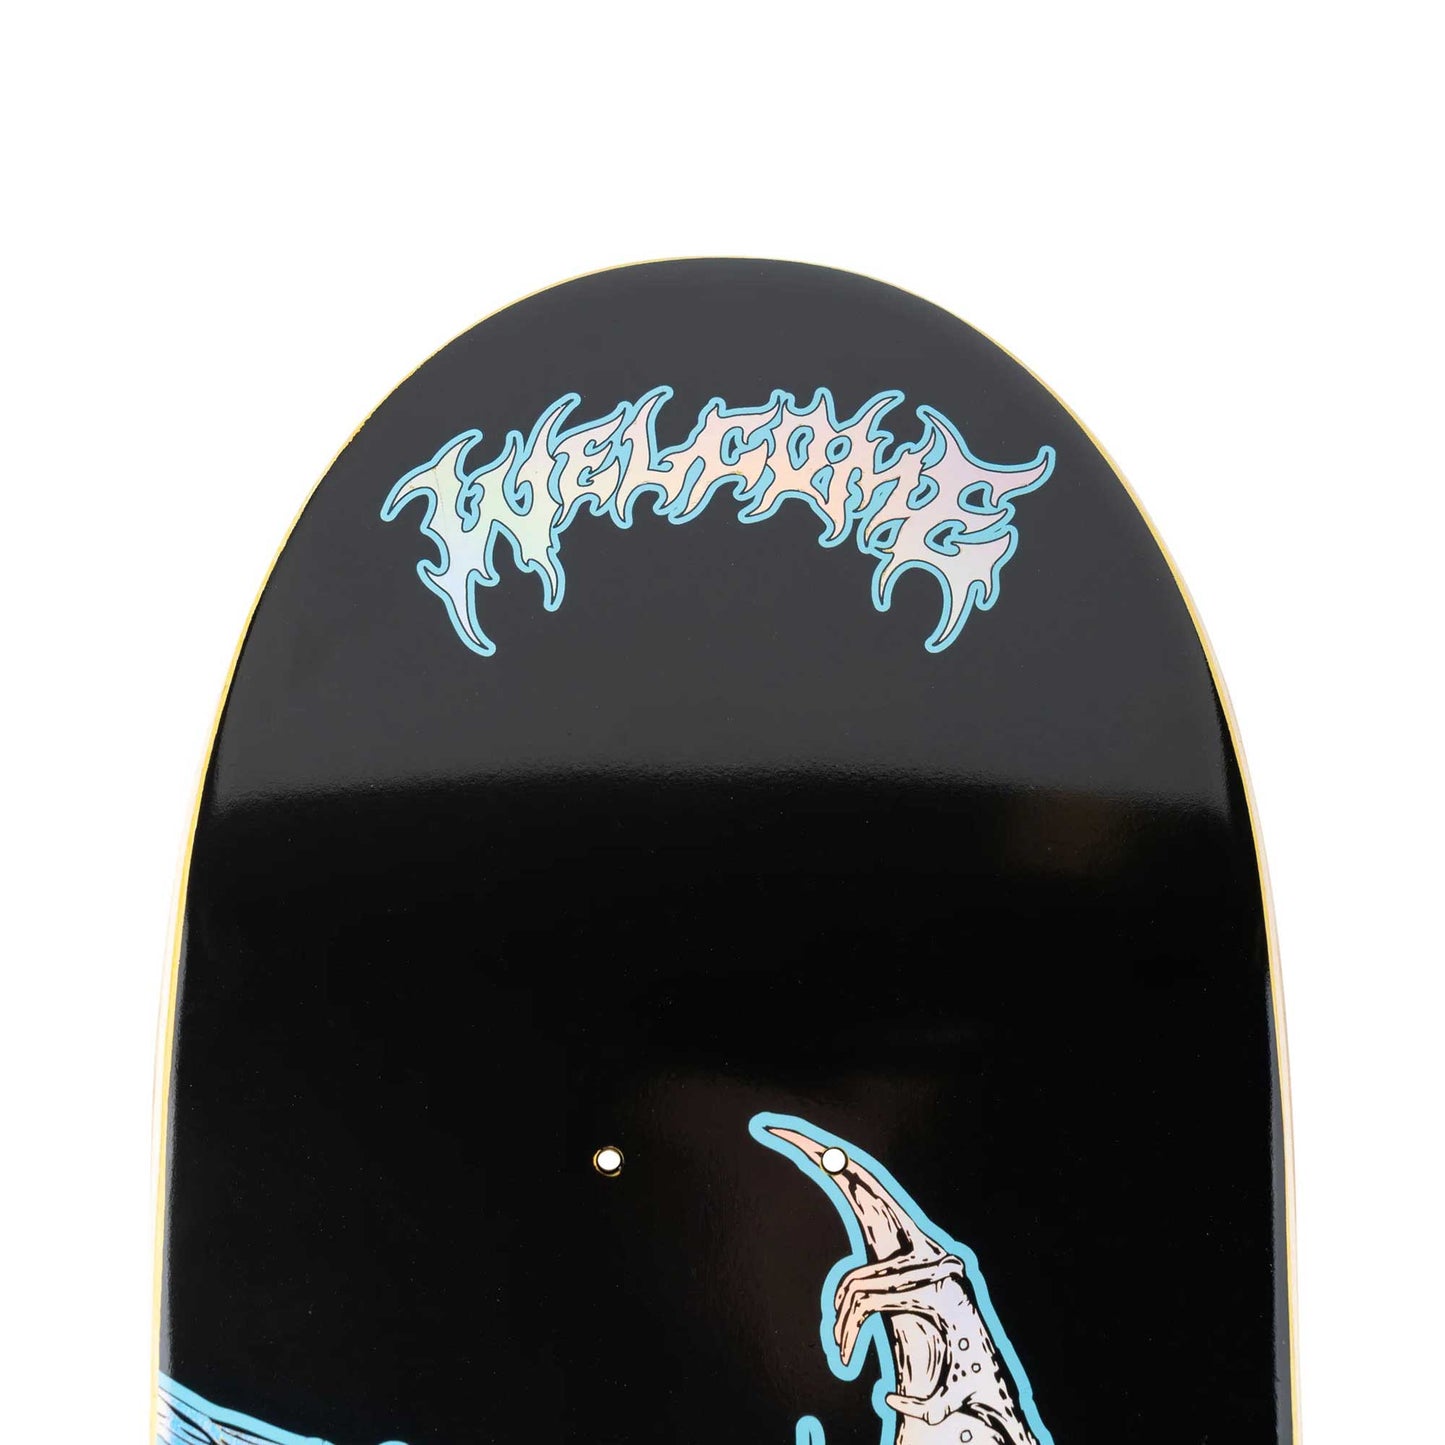 Welcome Infinitely Batty Son Of Planchette Deck, Black/Prism Foil (8.38”) - Tiki Room Skateboards - 5